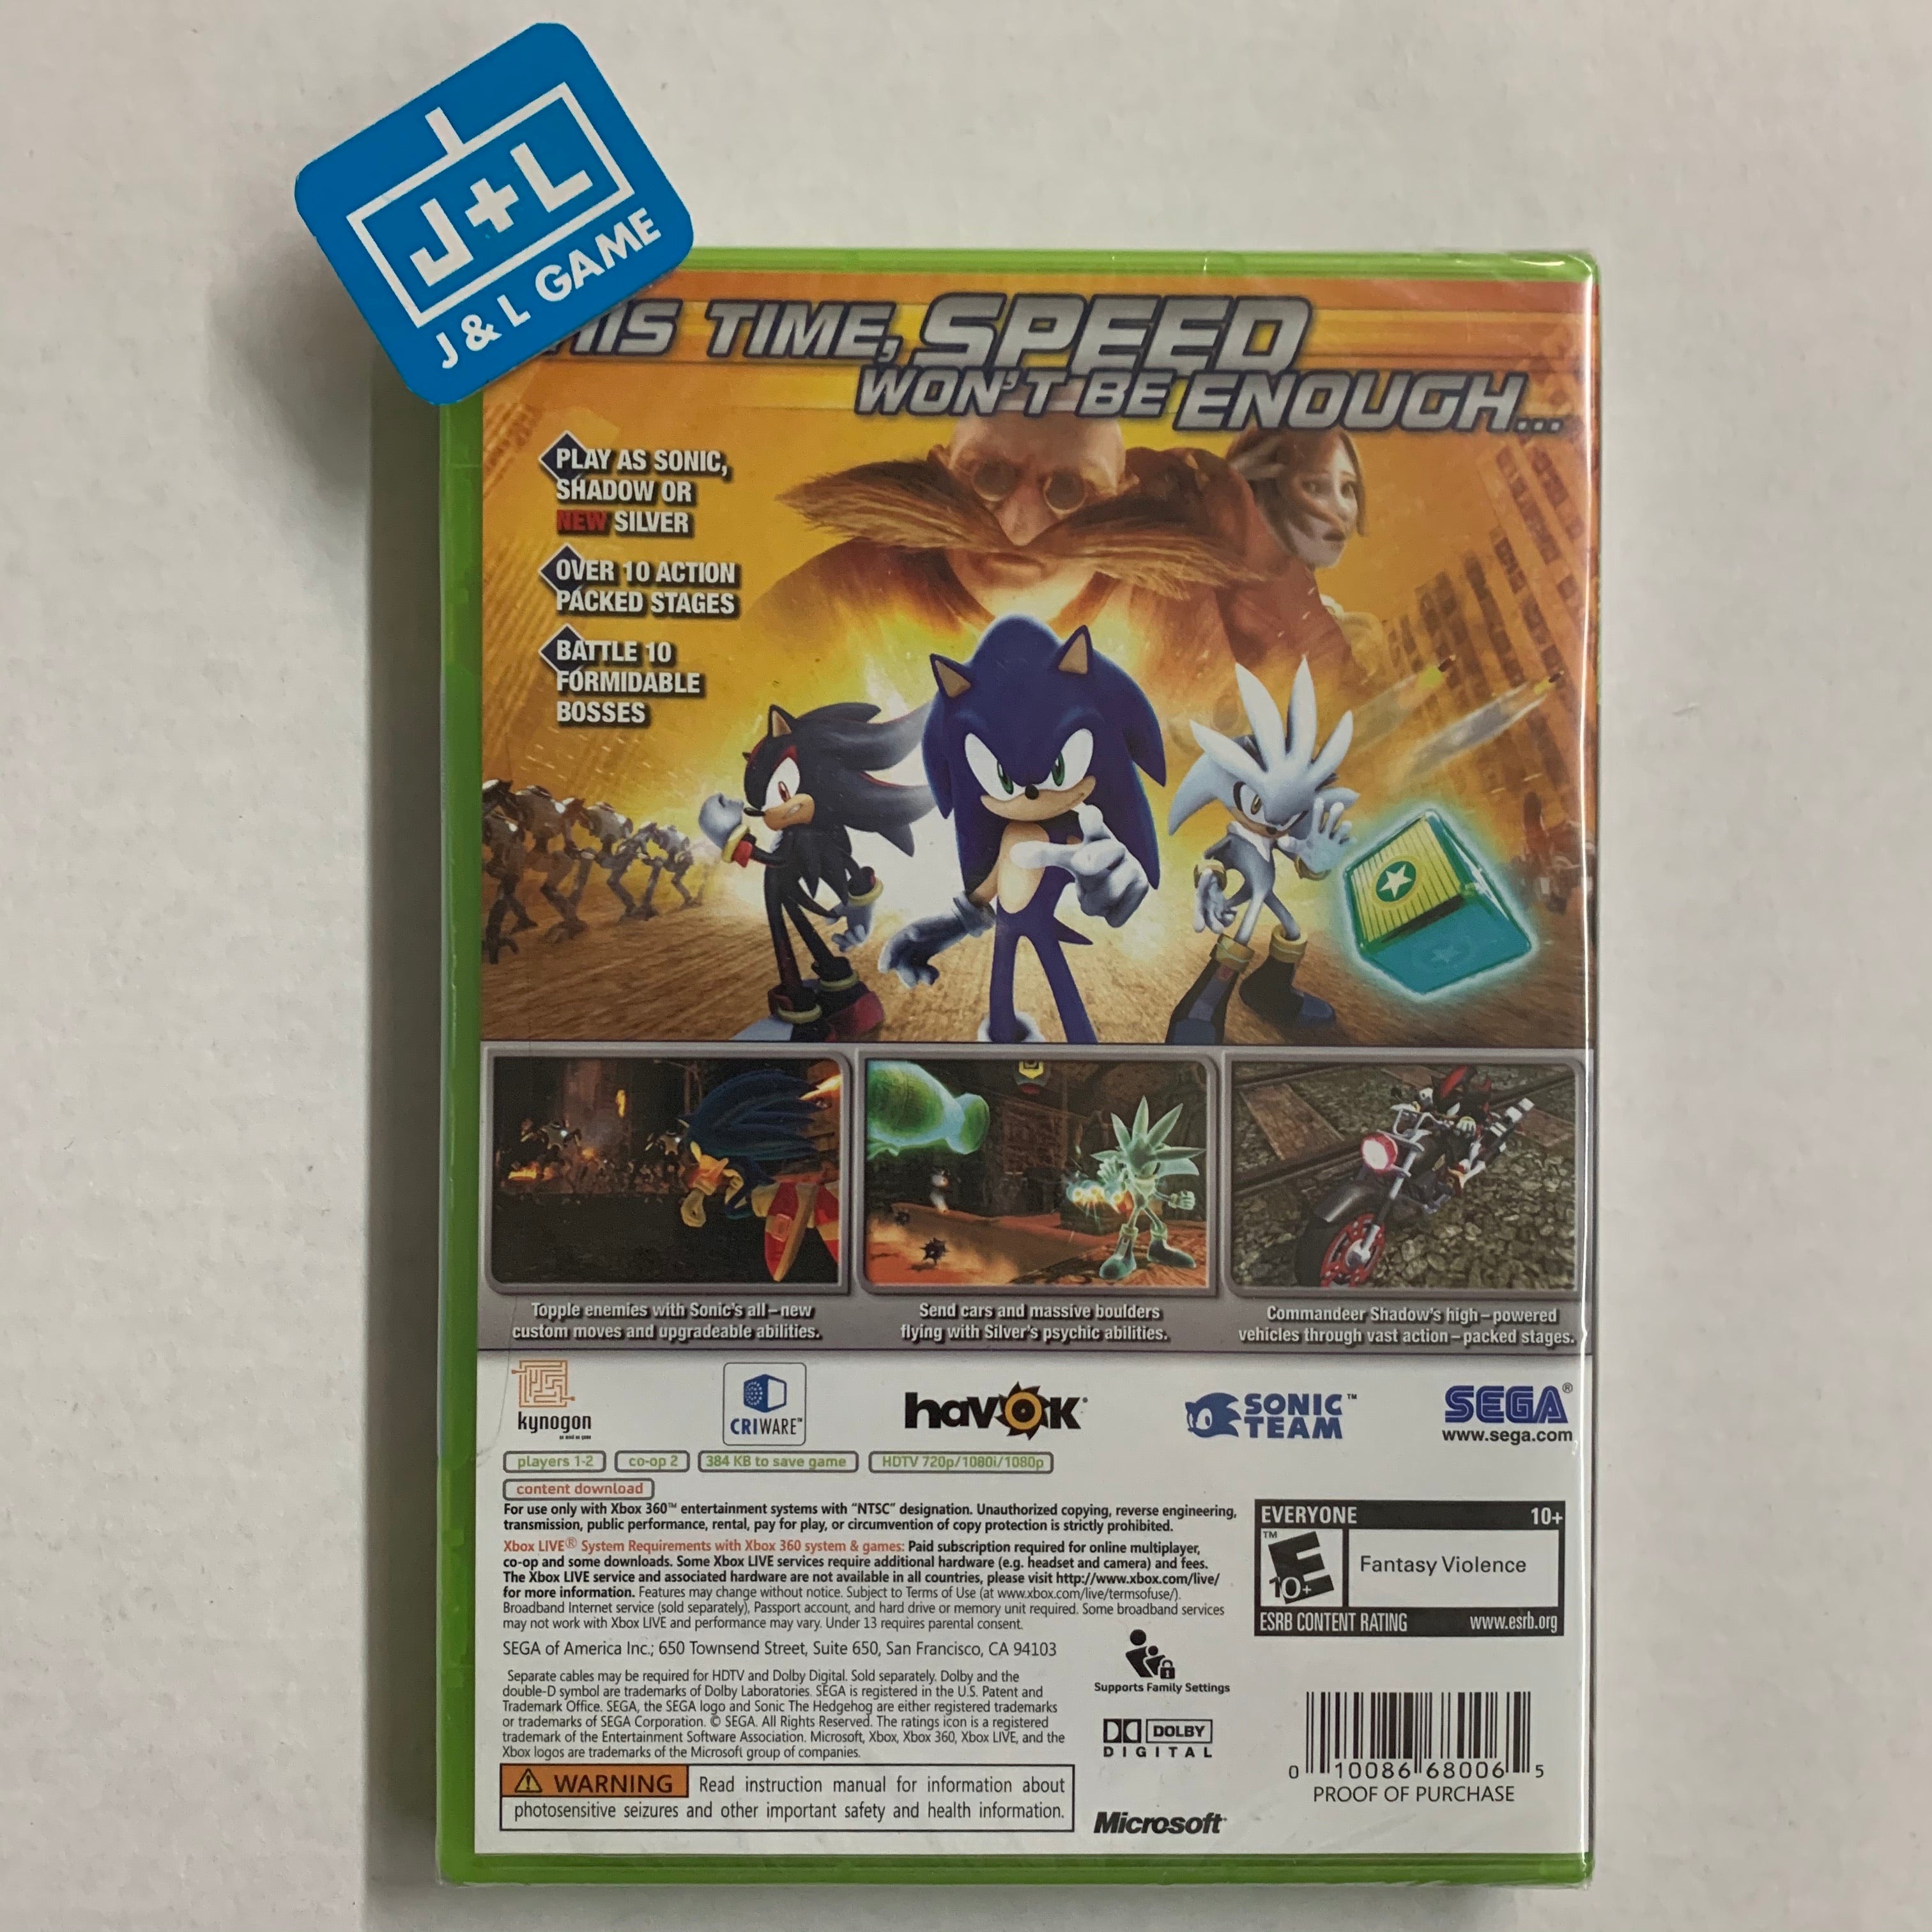 Sonic the Hedgehog (Platinum Family Hits) - Xbox 360 Video Games Sega   